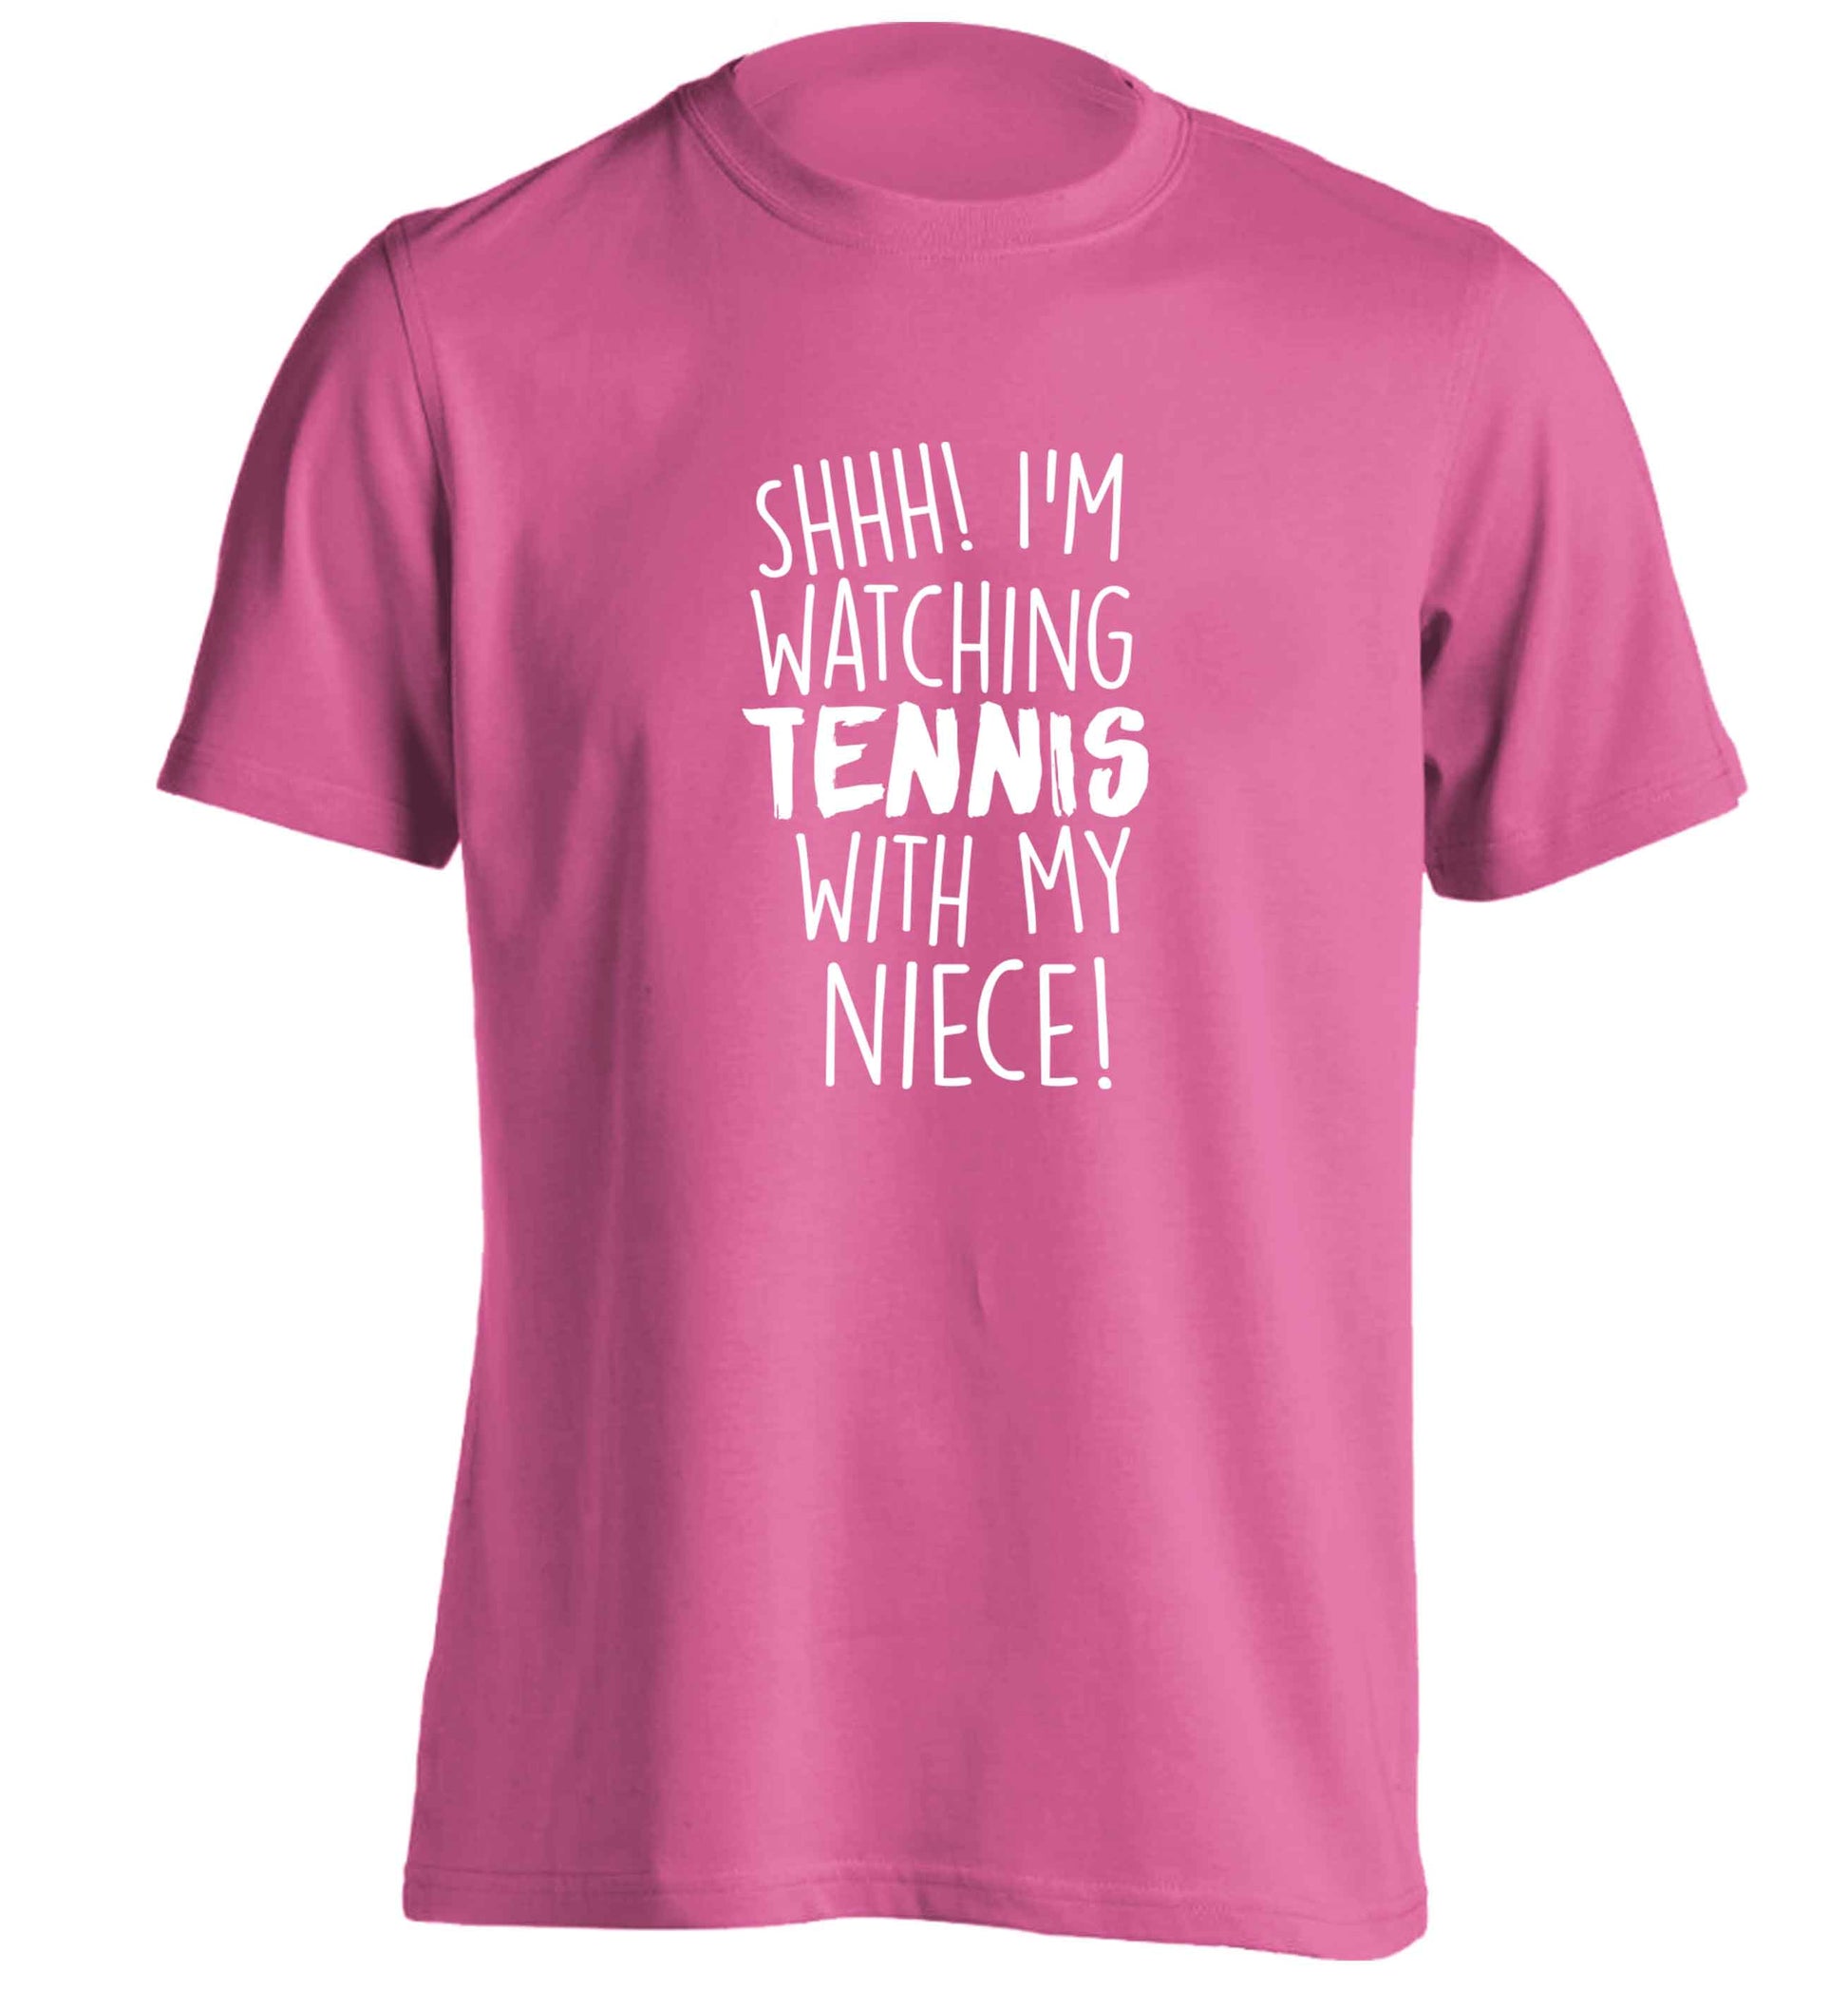 Shh! I'm watching tennis with my niece! adults unisex pink Tshirt 2XL